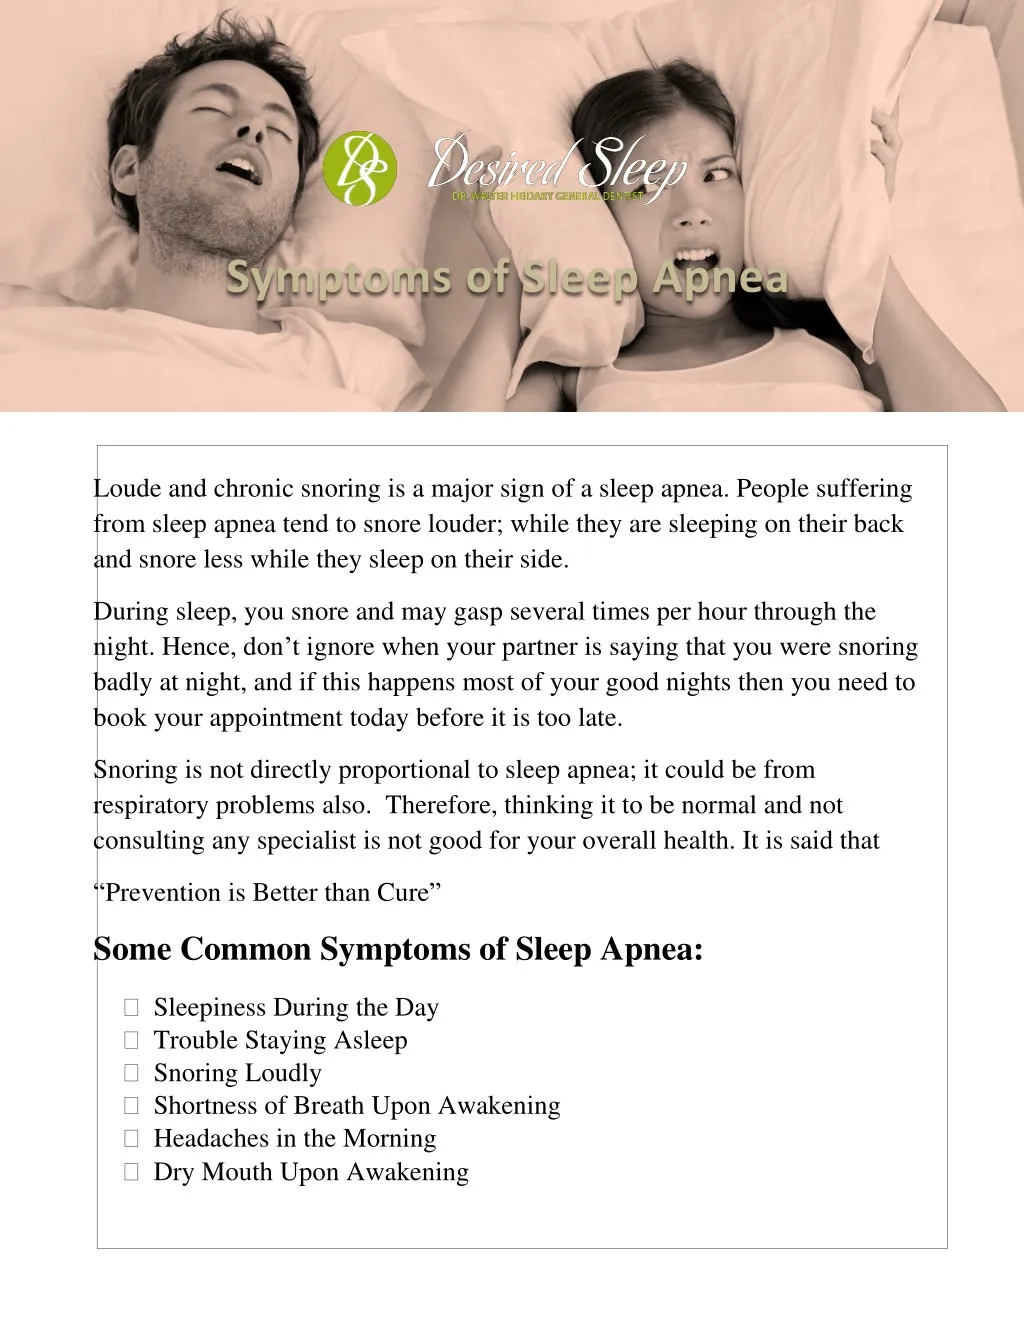 symptoms of sleep apnea